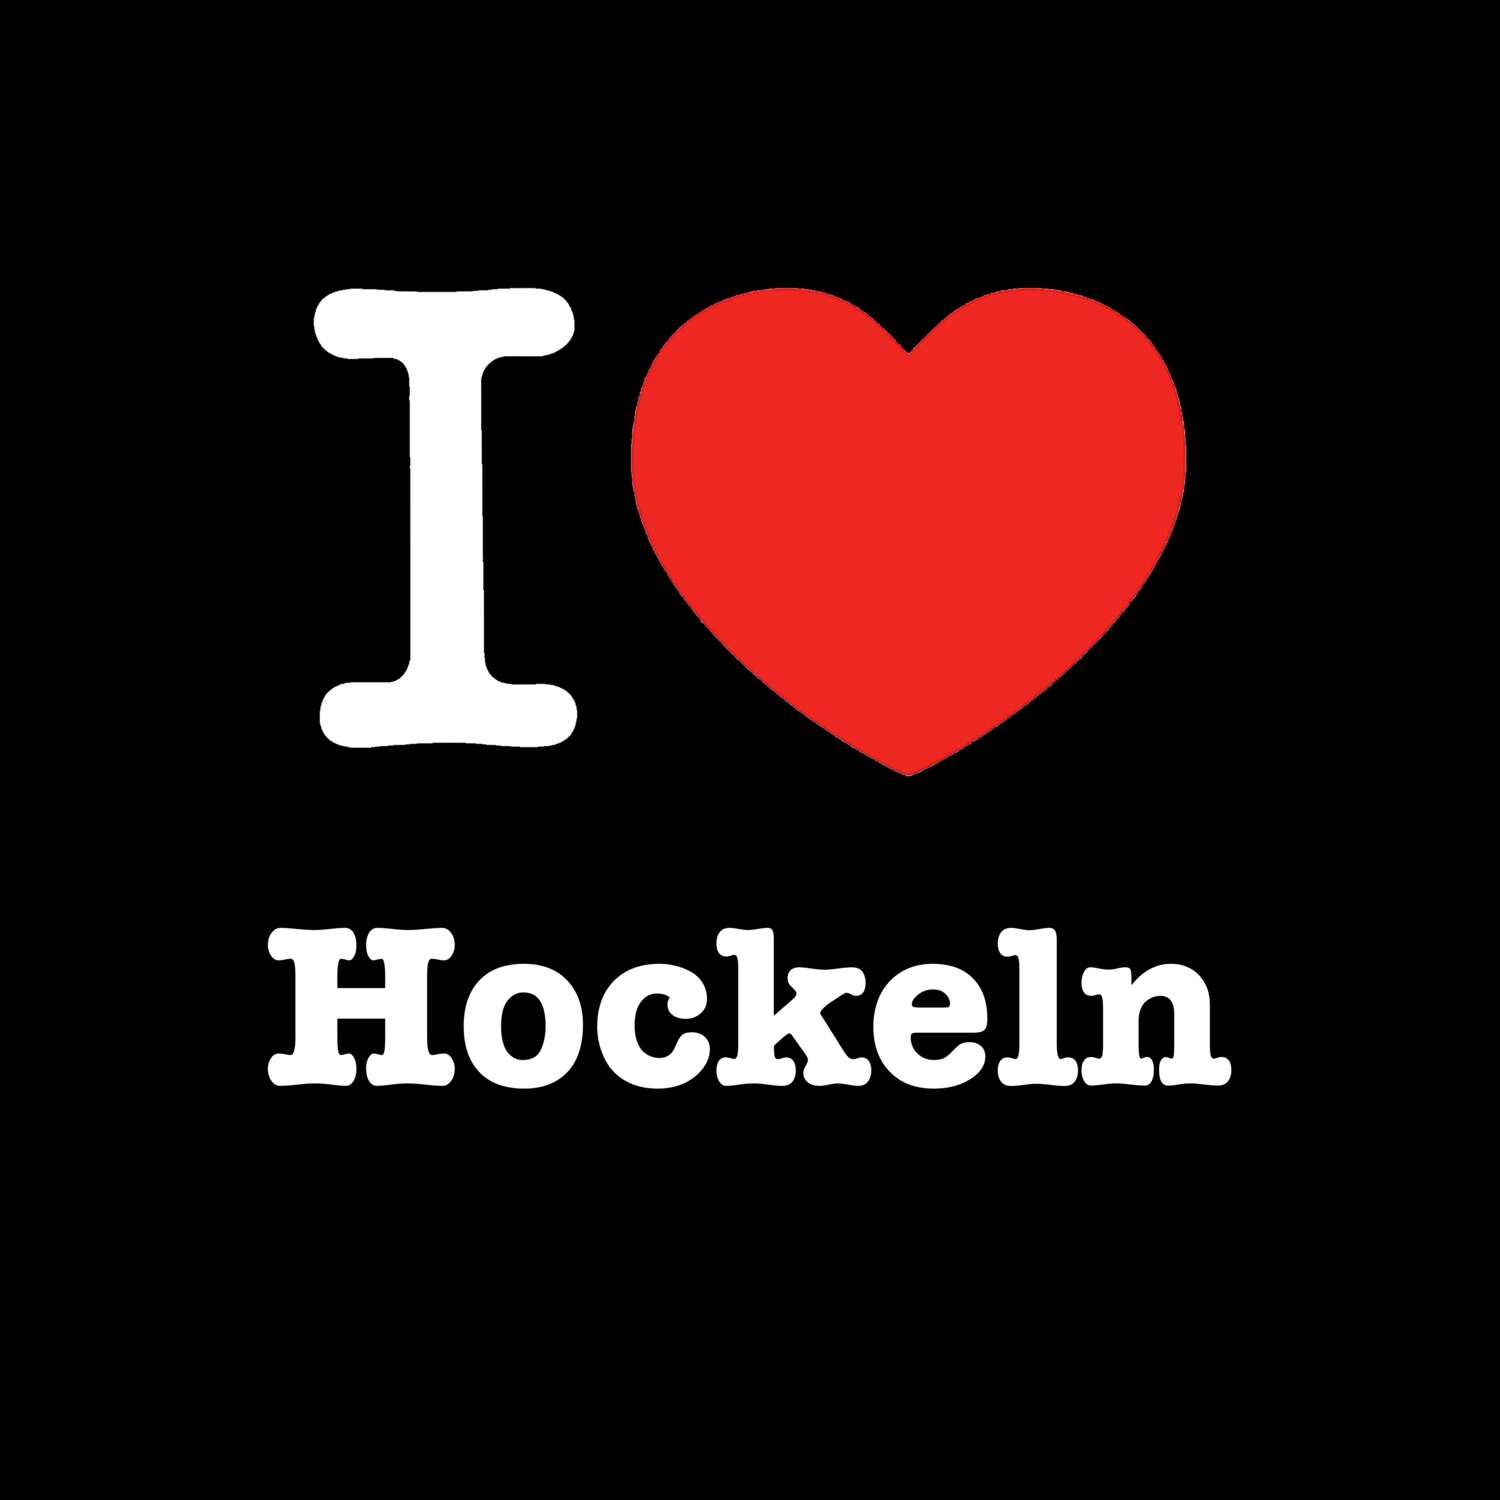 Hockeln T-Shirt »I love«